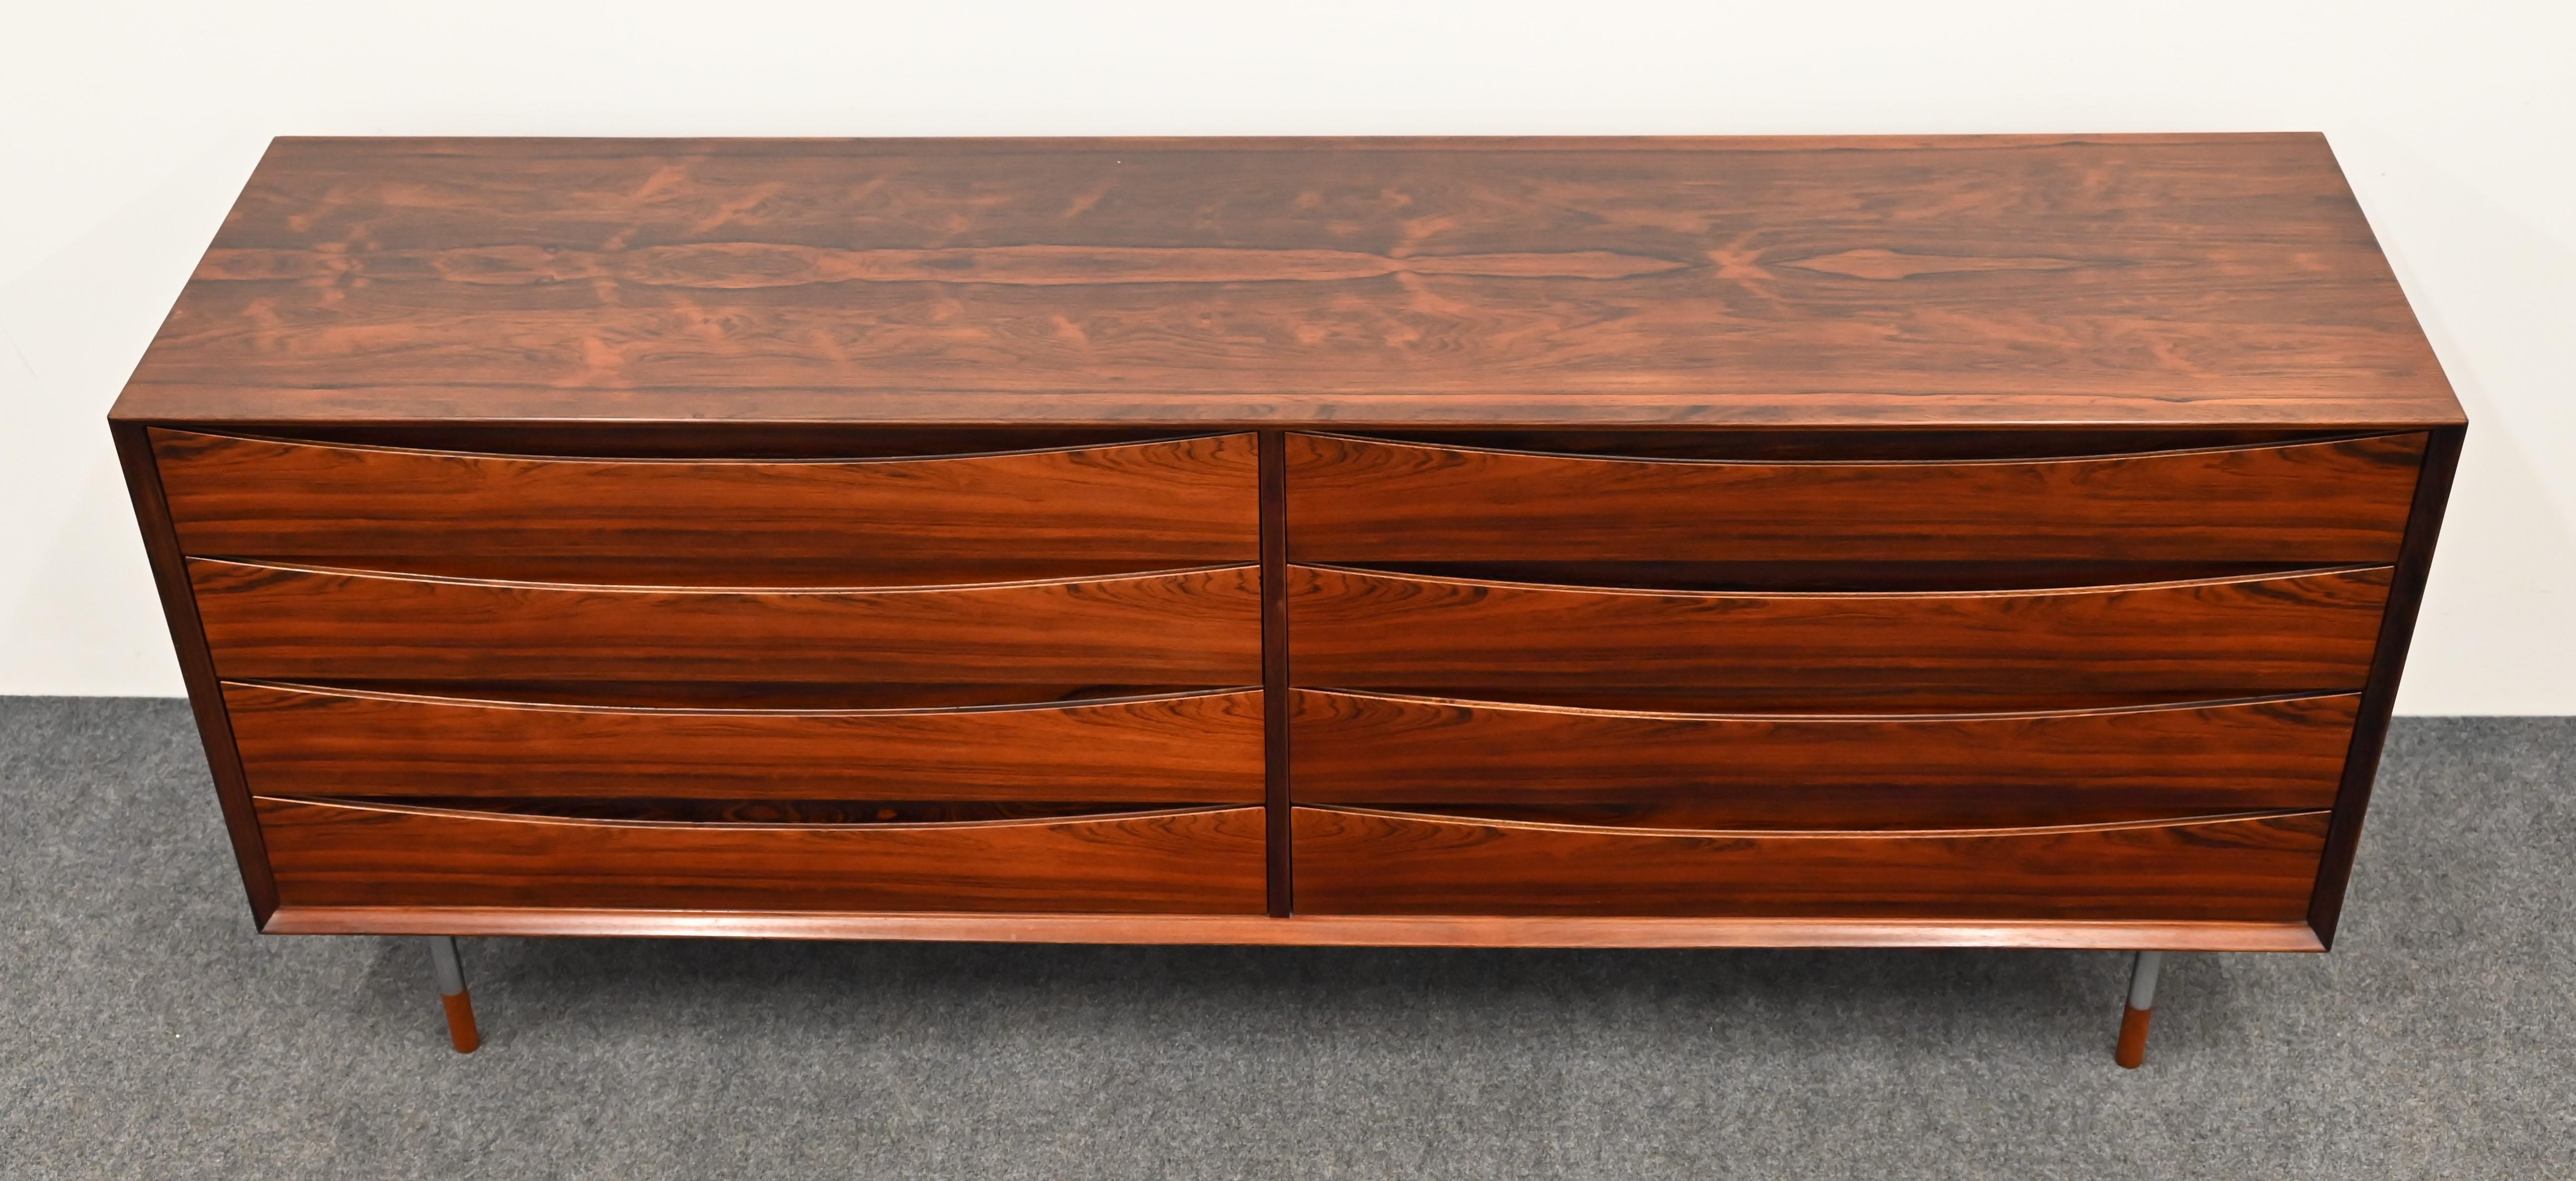 Scandinavian Modern Rosewood Dresser by Arne Vodder for Sibast, 1960s For Sale